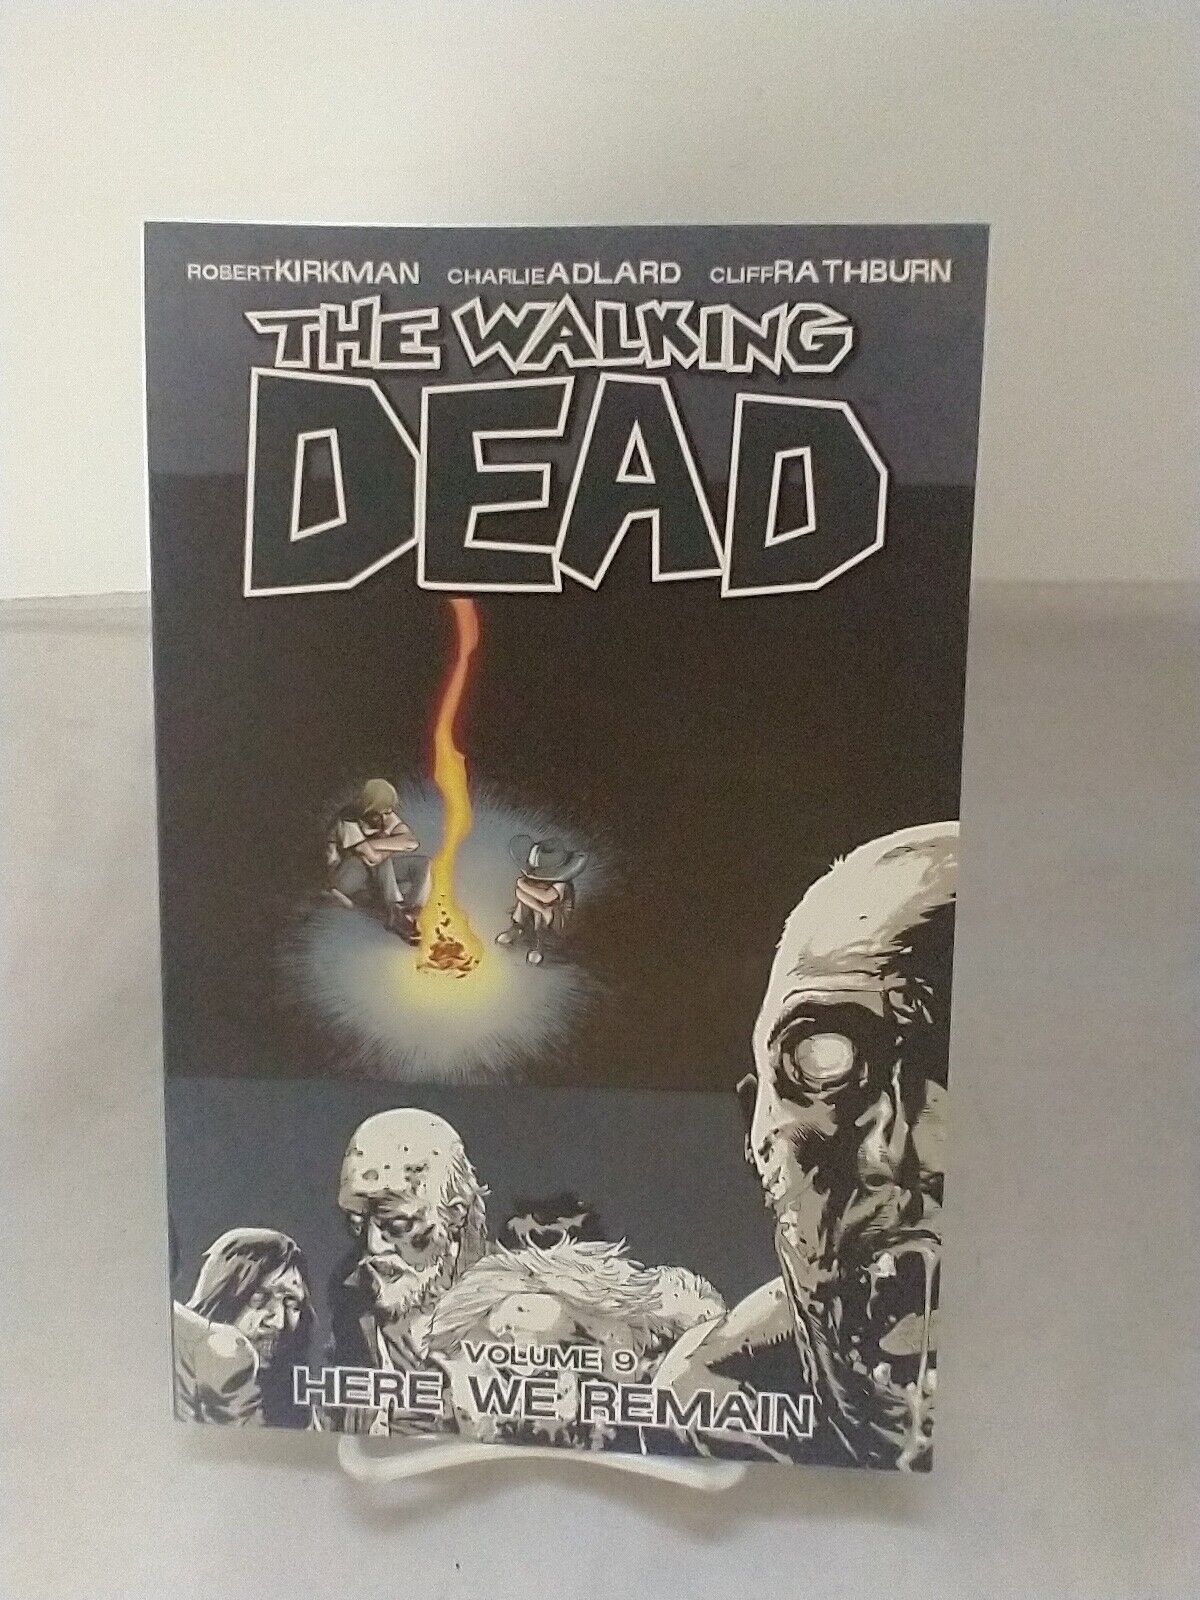 The Walking Dead Volume 9: Here We Remain Trade Paperback Robert Kirkman Image